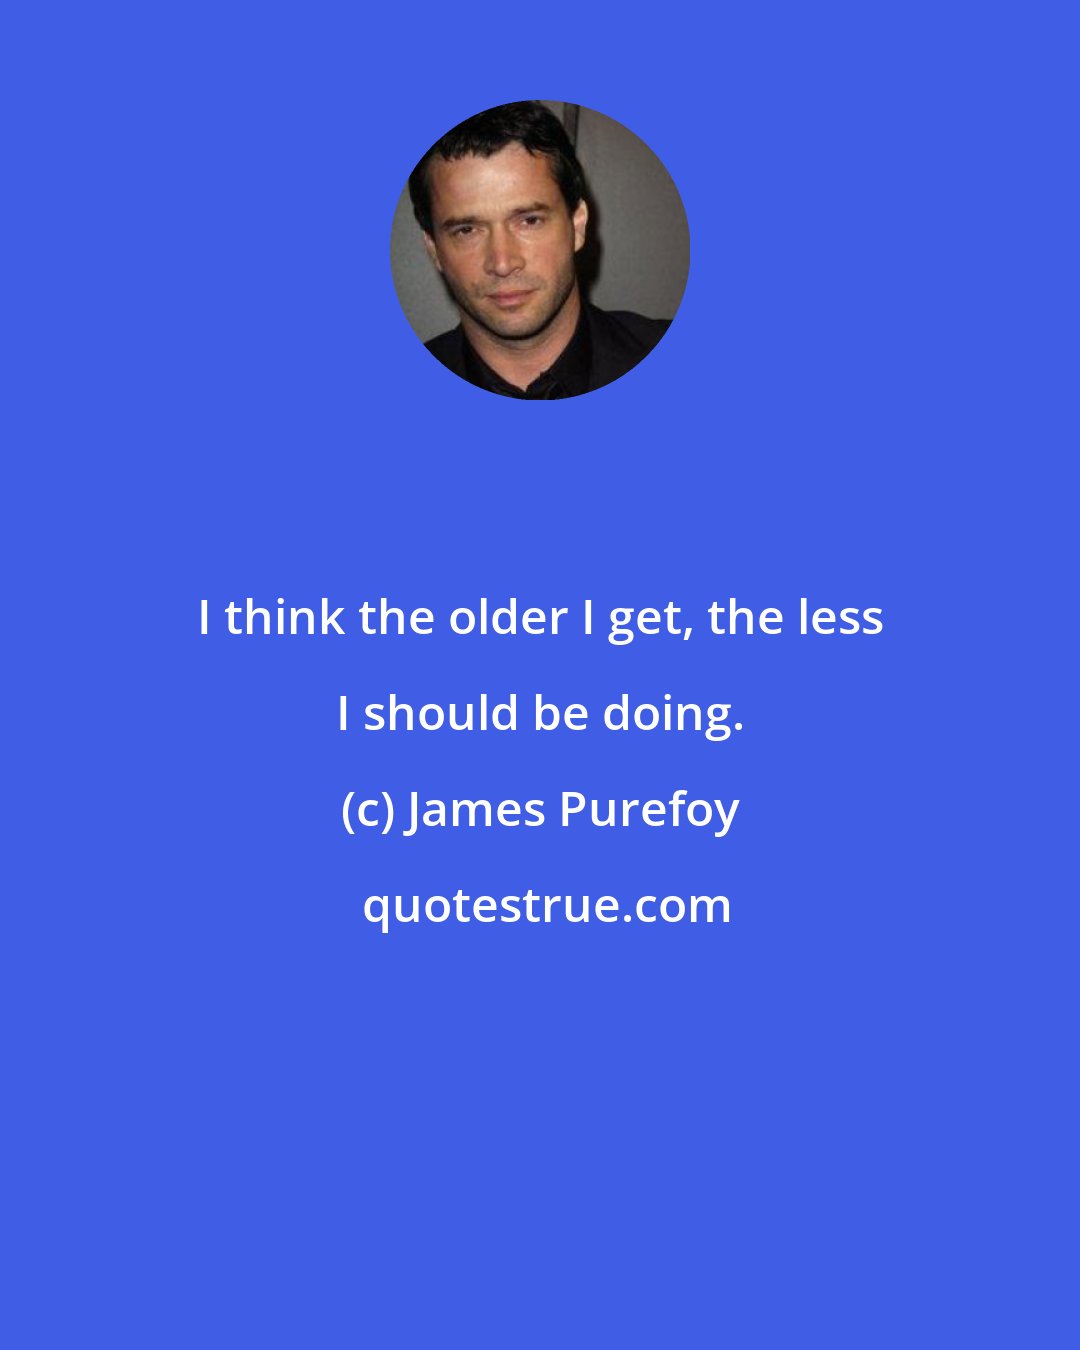 James Purefoy: I think the older I get, the less I should be doing.